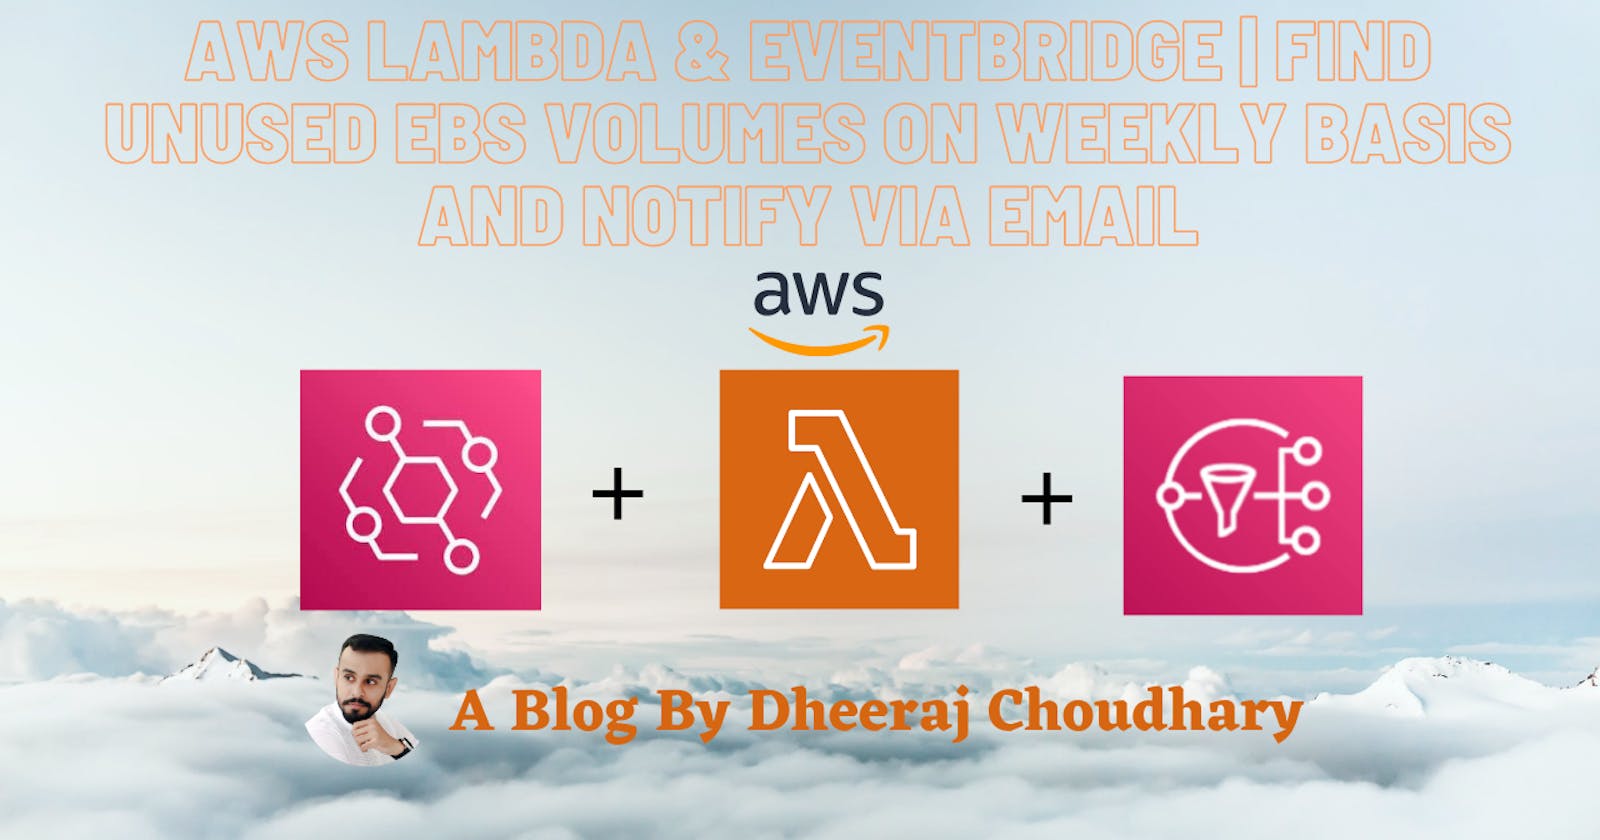 AWS Lambda & EventBridge | Find Unused EBS Volumes On Weekly Basis And Notify Via Email